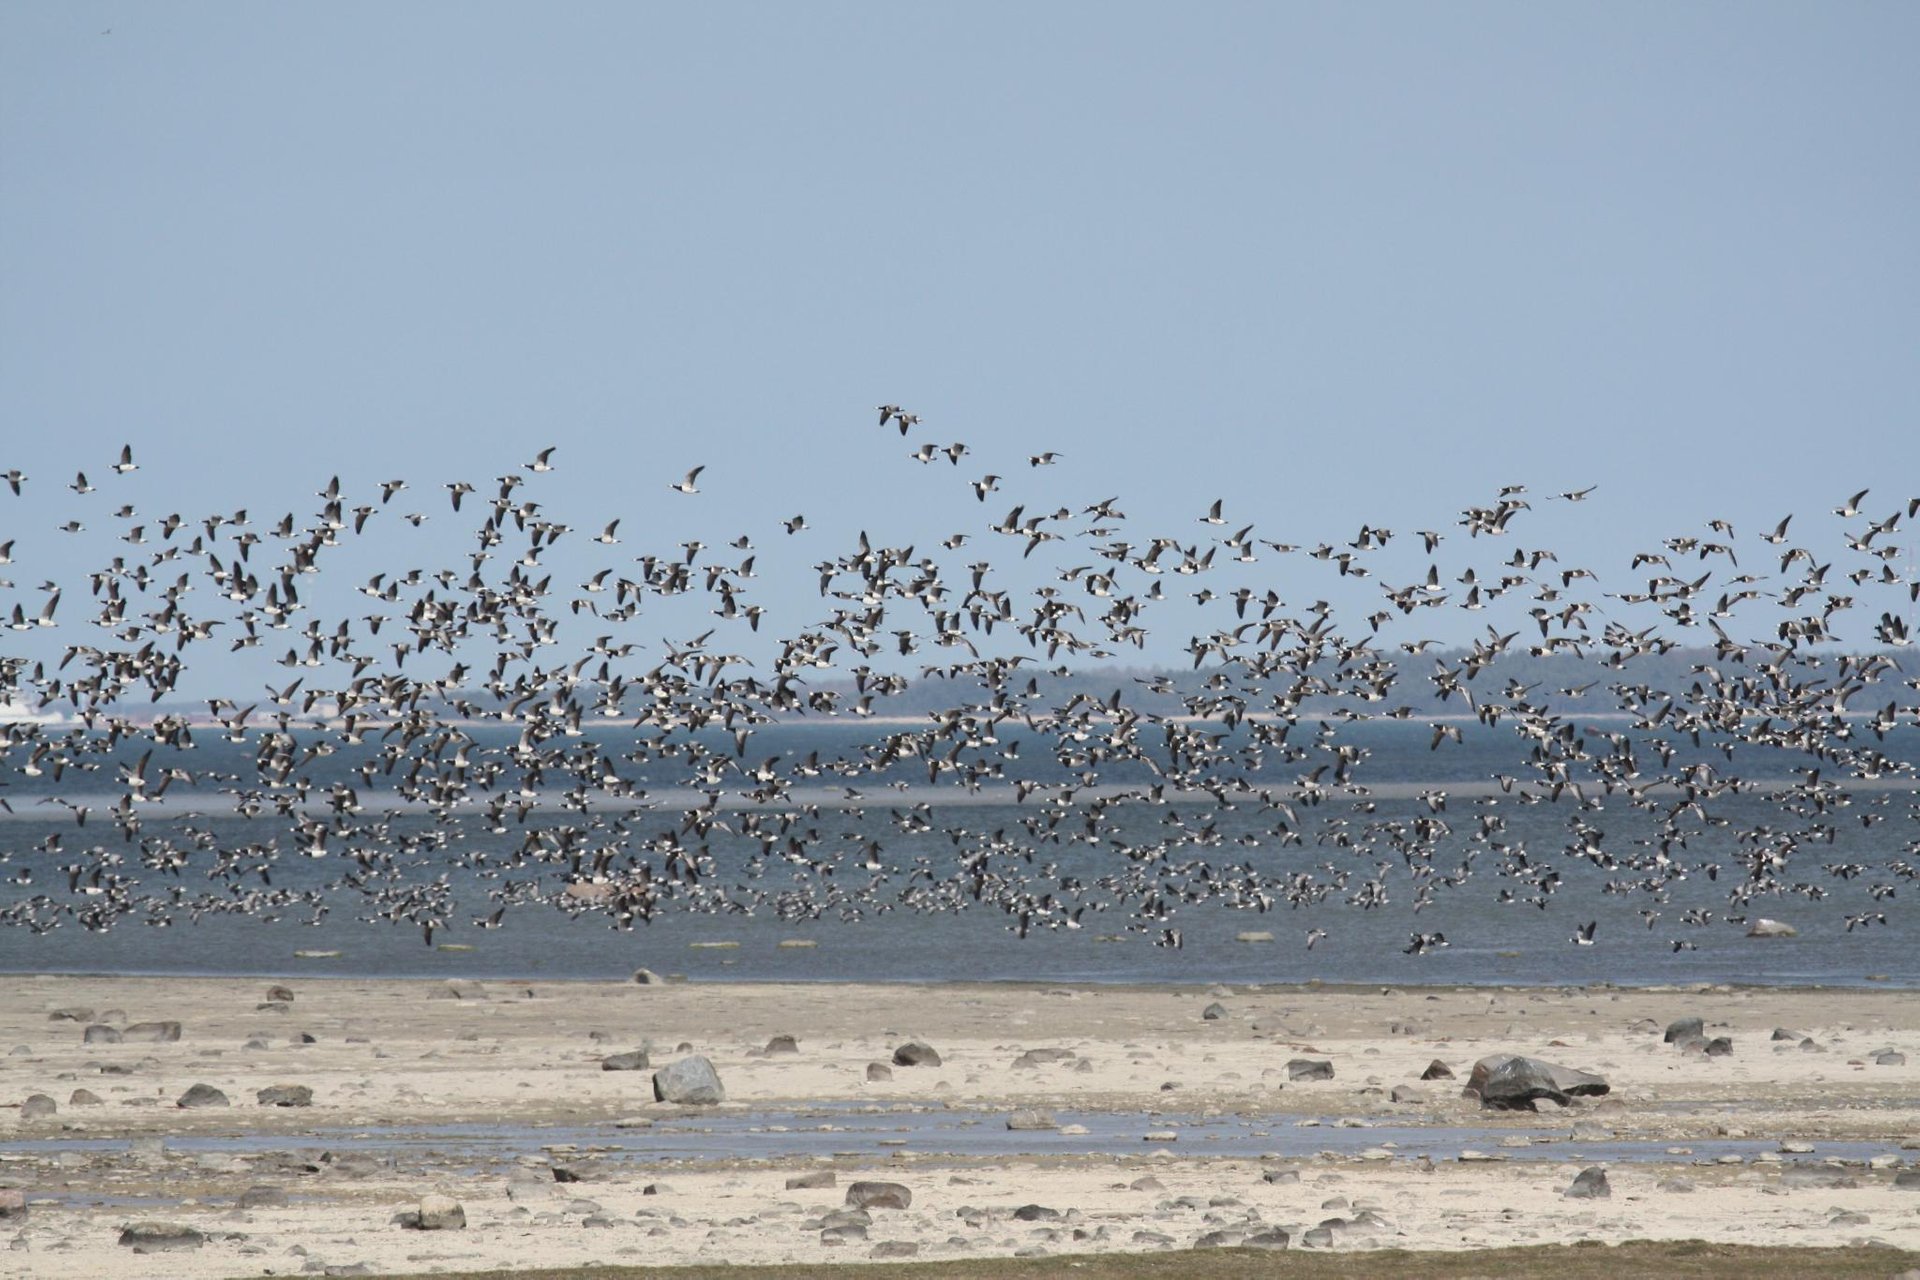 Birdwatching during Mass Bird Migration